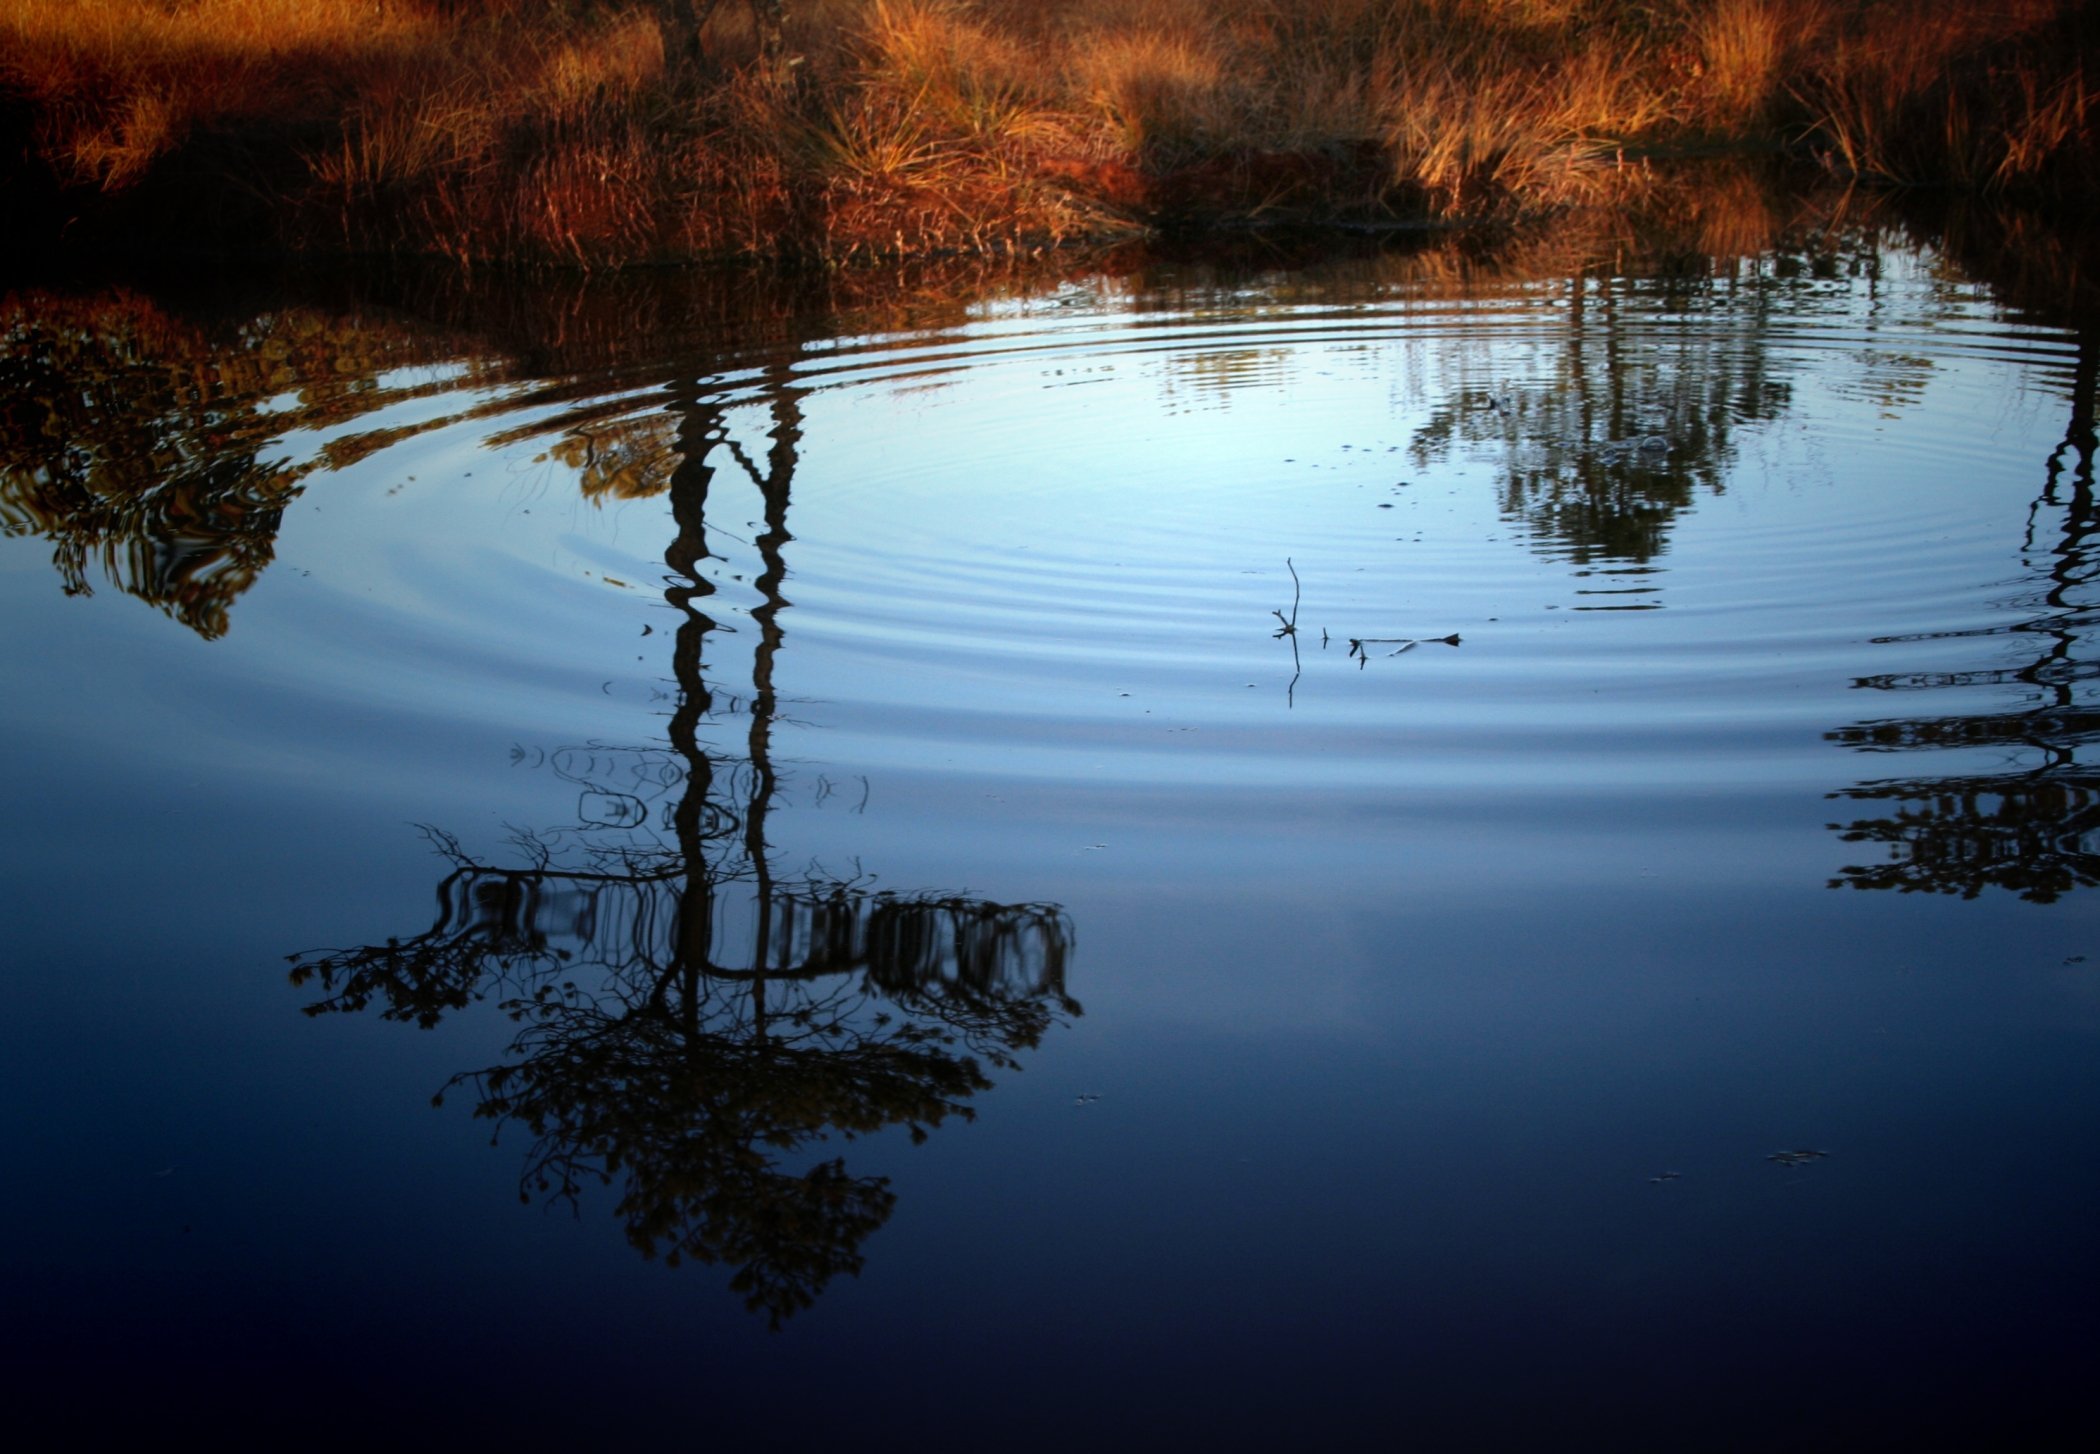 Отражение текста в воде. Отражение в воде. Красивое отражение в воде. Зеркальное отражение в воде. Отражение предметов в воде.